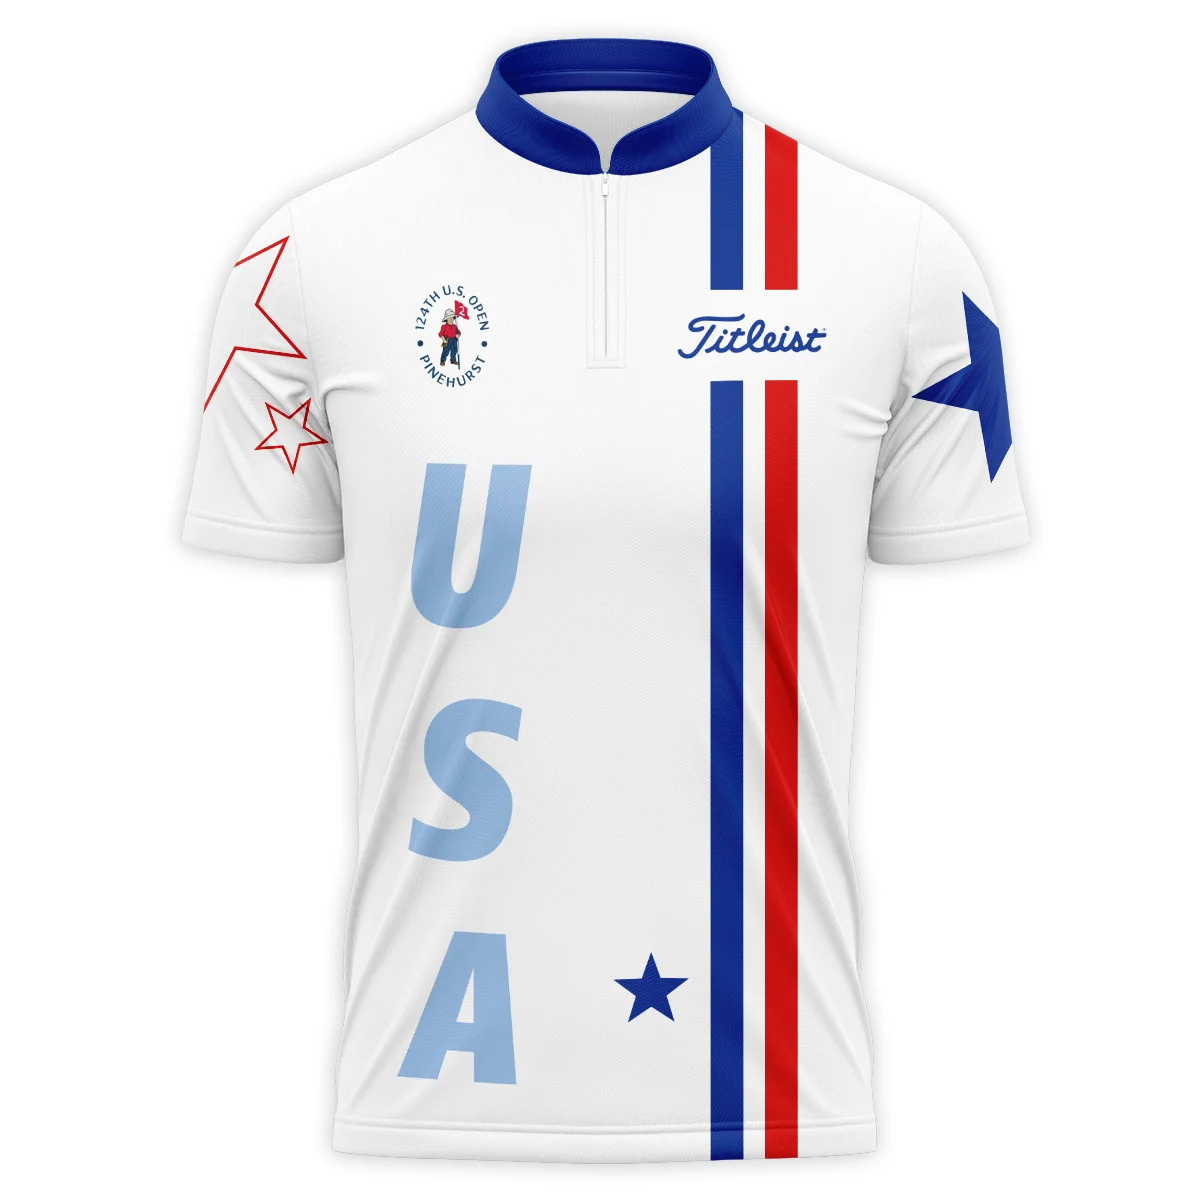 124th U.S. Open Pinehurst Titleist Blue Red Line White Polo Shirt Style Classic Polo Shirt For Men